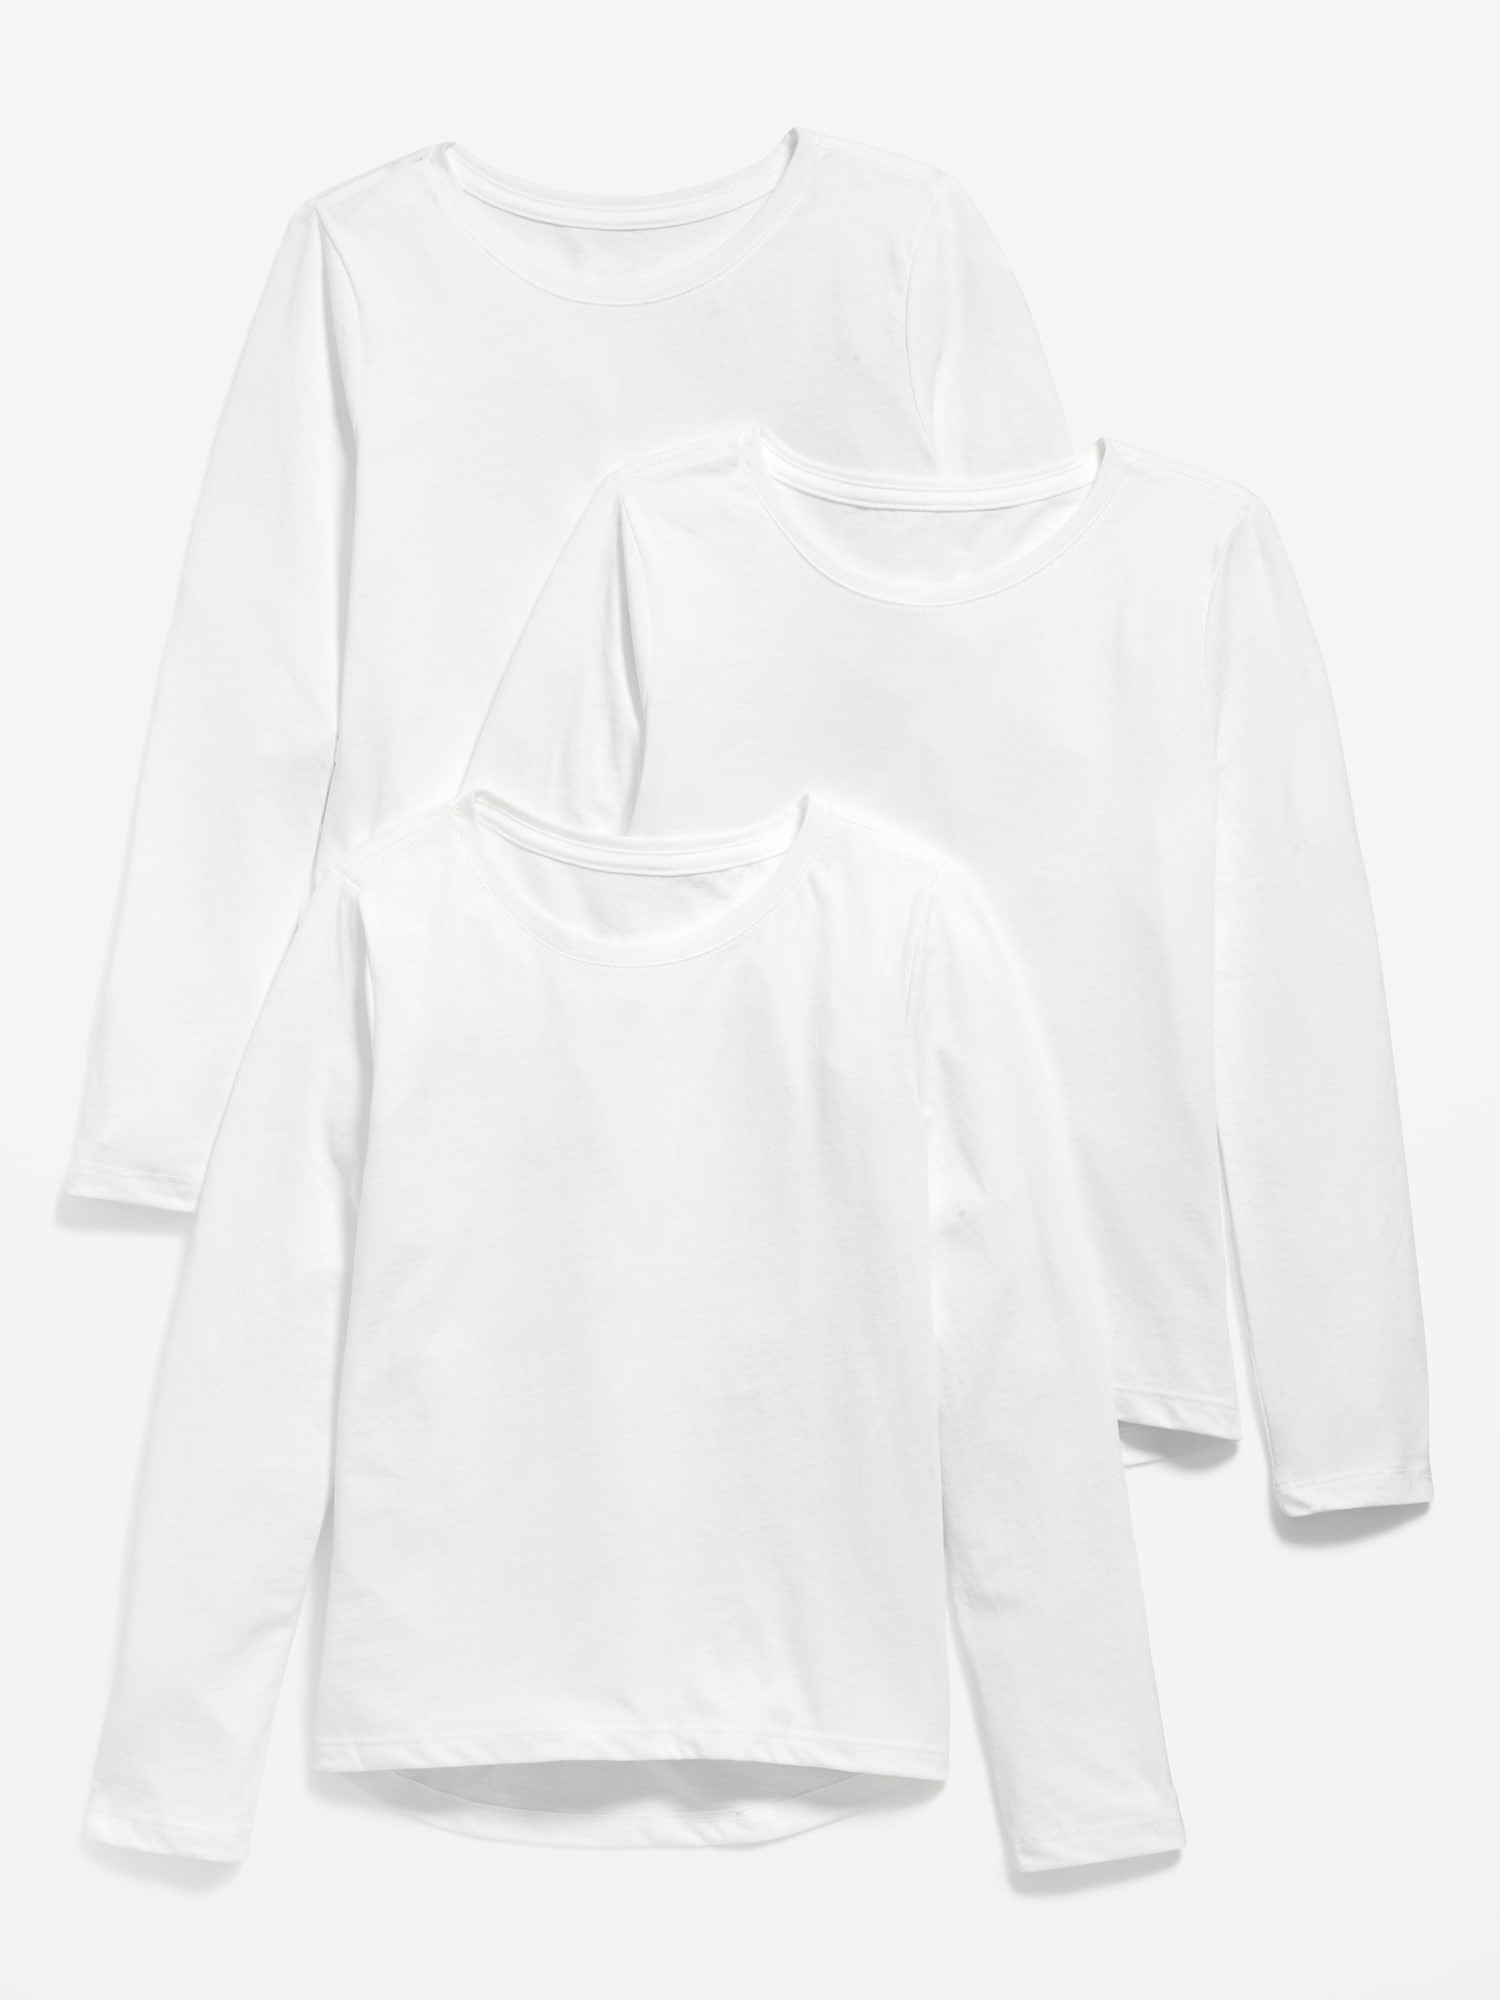 Girls Long | Navy Old Sleeve Shirts